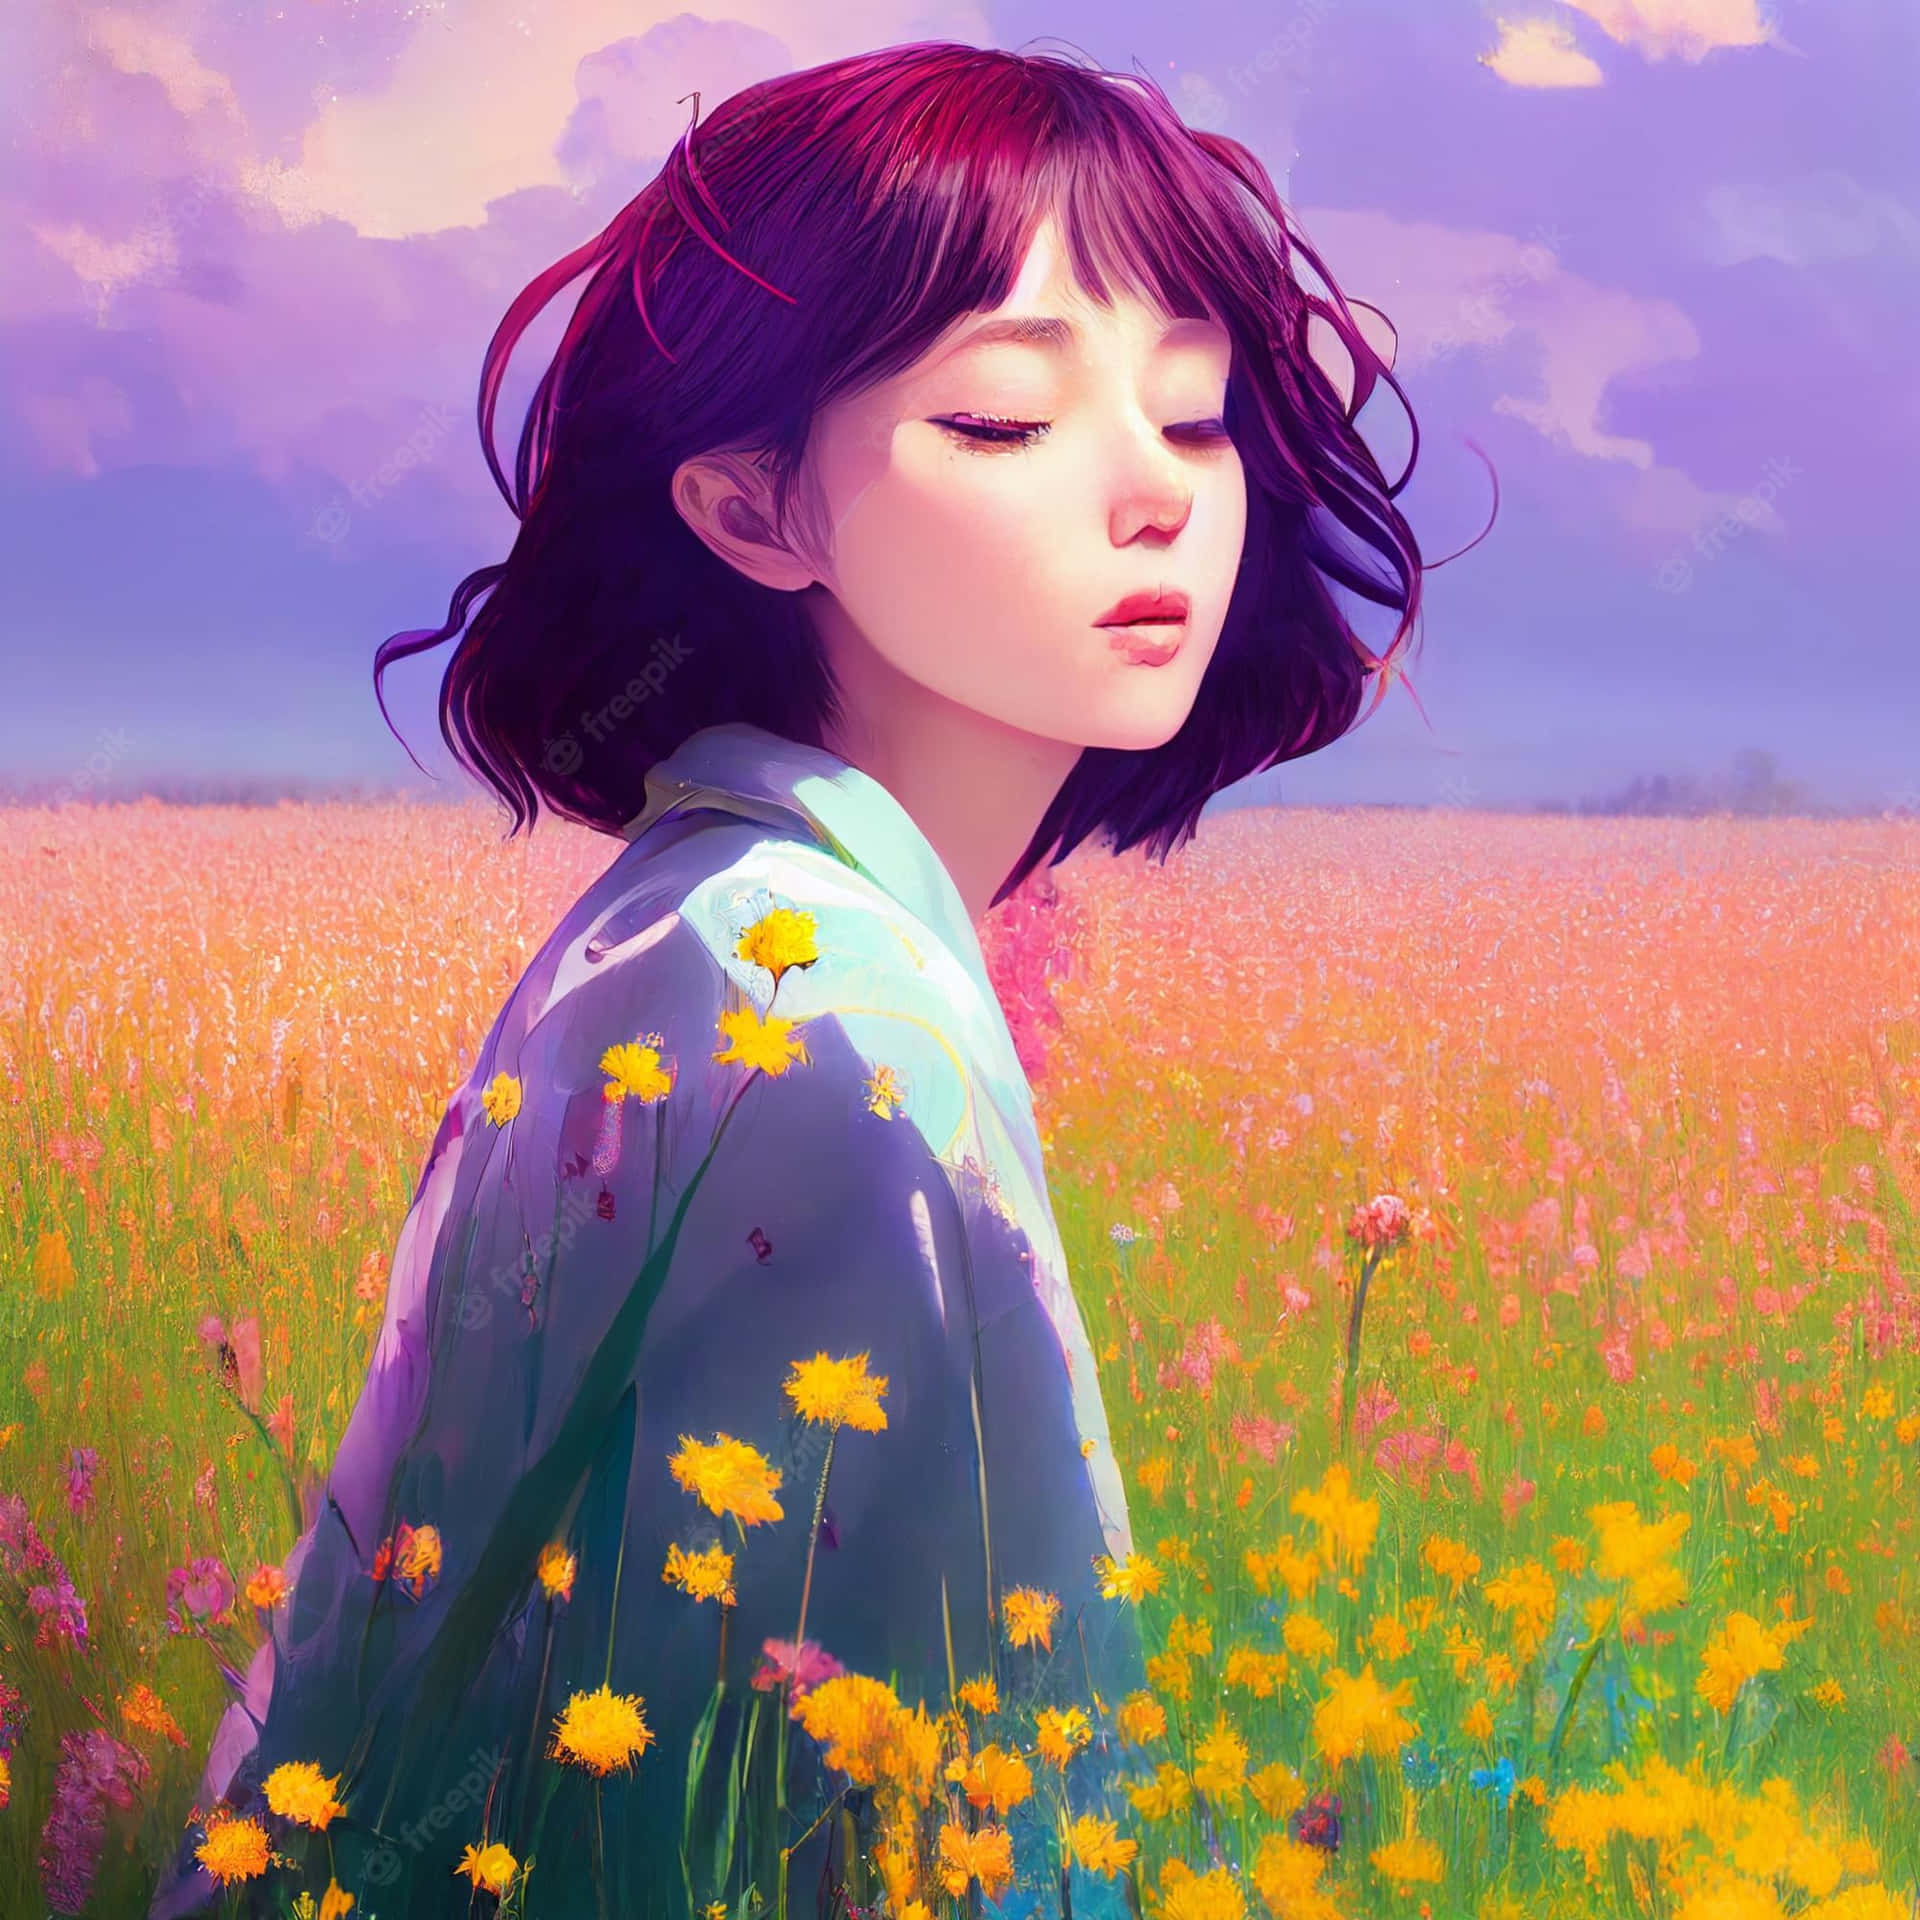 Korean Anime Girl On A Field Of Flowers